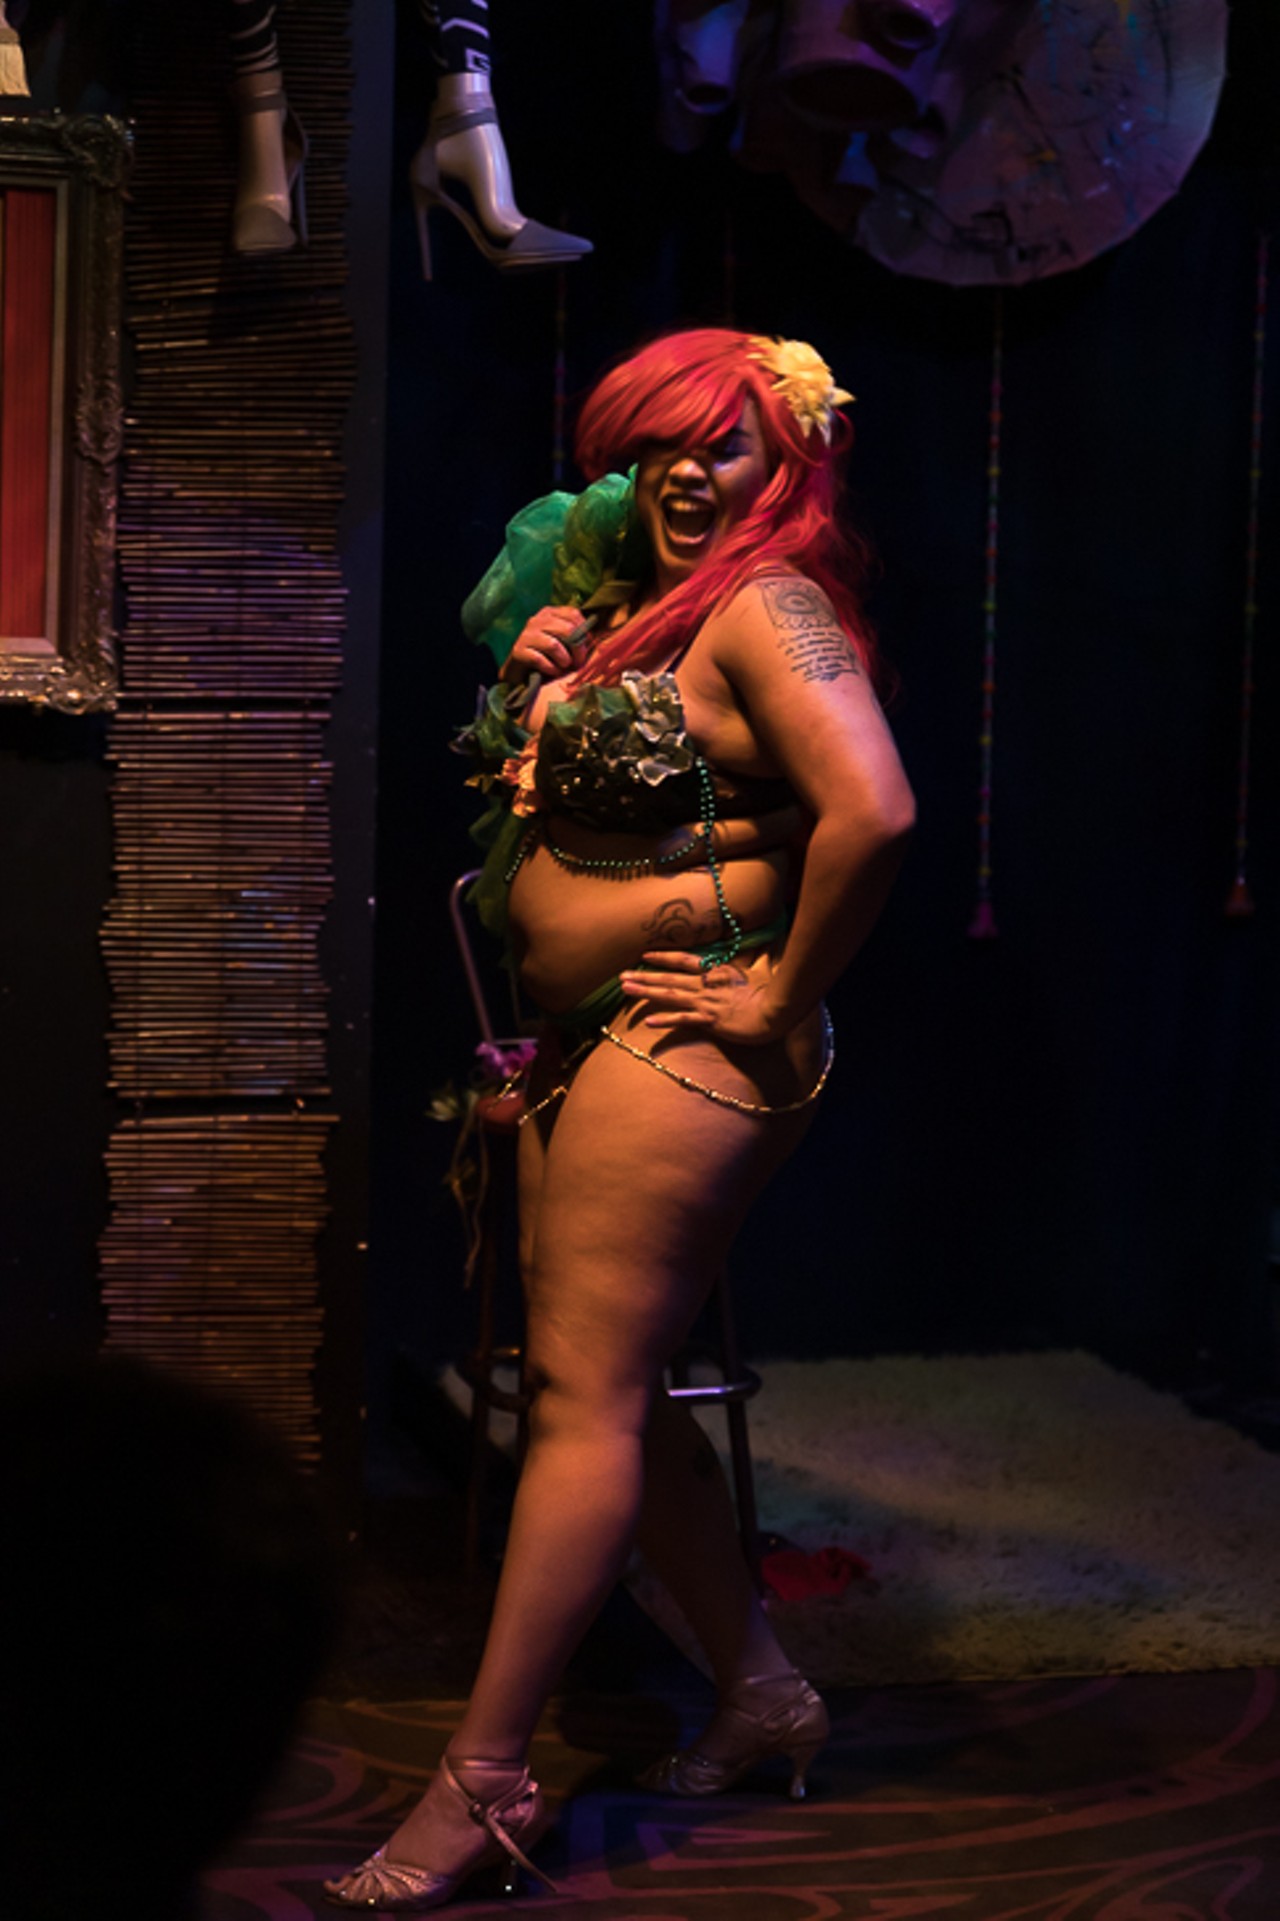 Batman-themed burlesque came to Detroit's Armageddon Beachparty Lounge